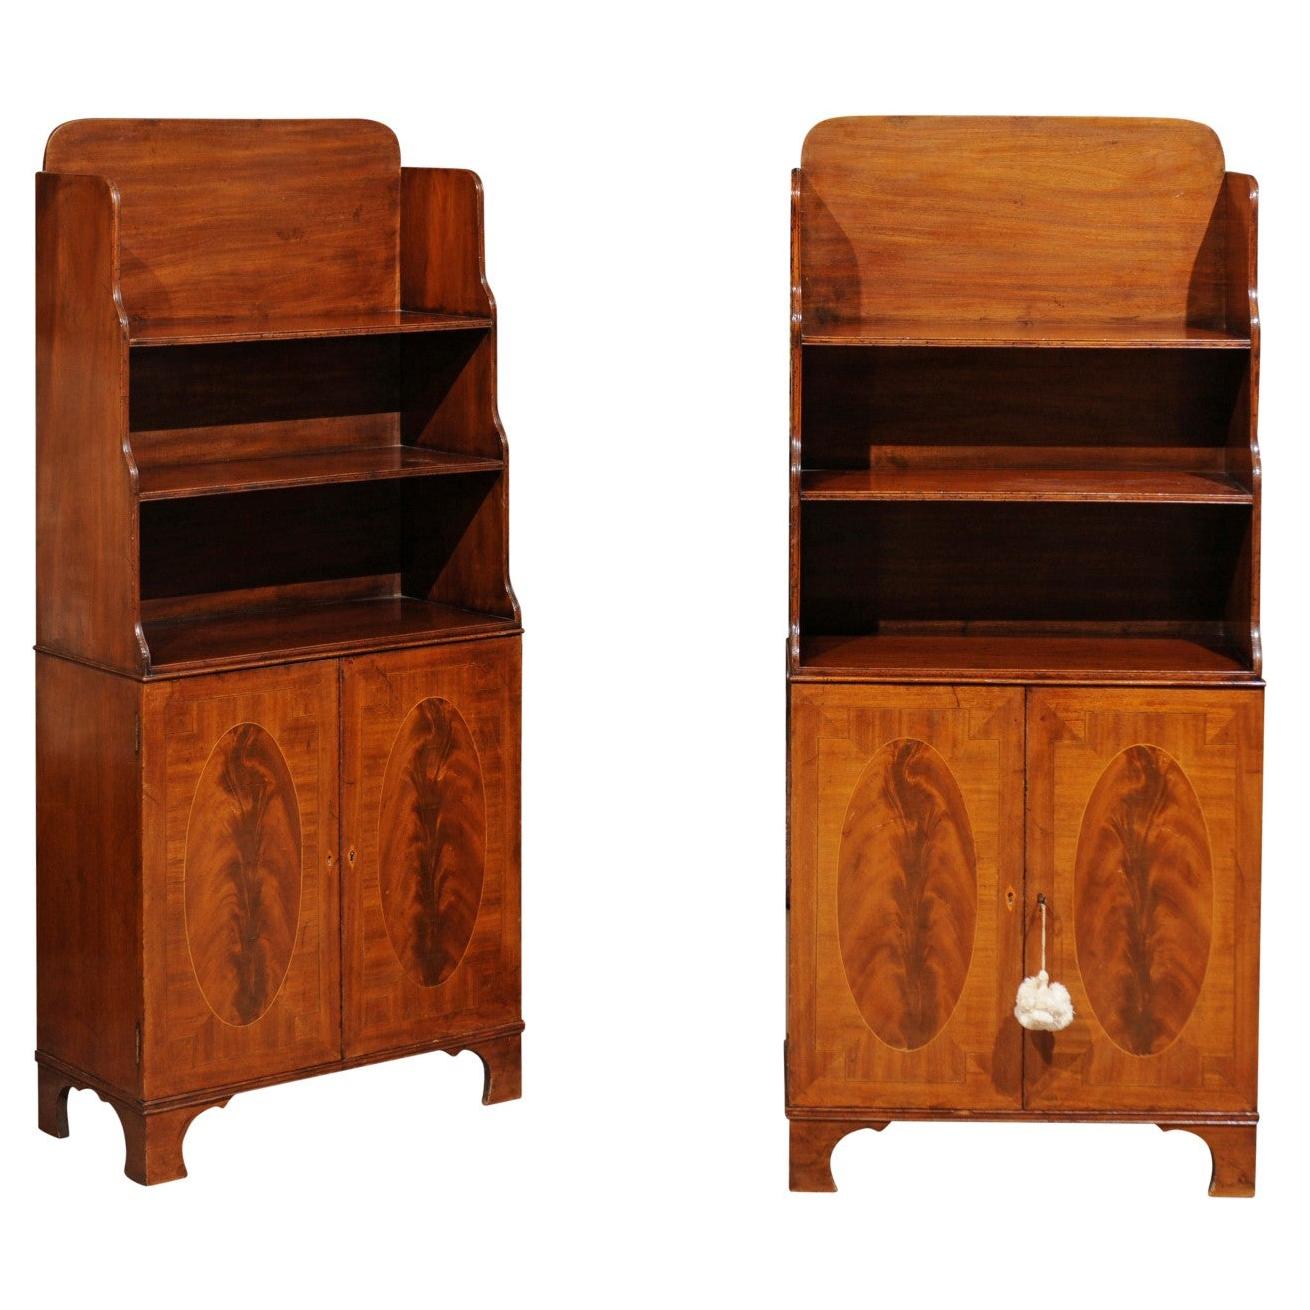 Pair of 19th Century English Regency Style Mahogany Bookcases